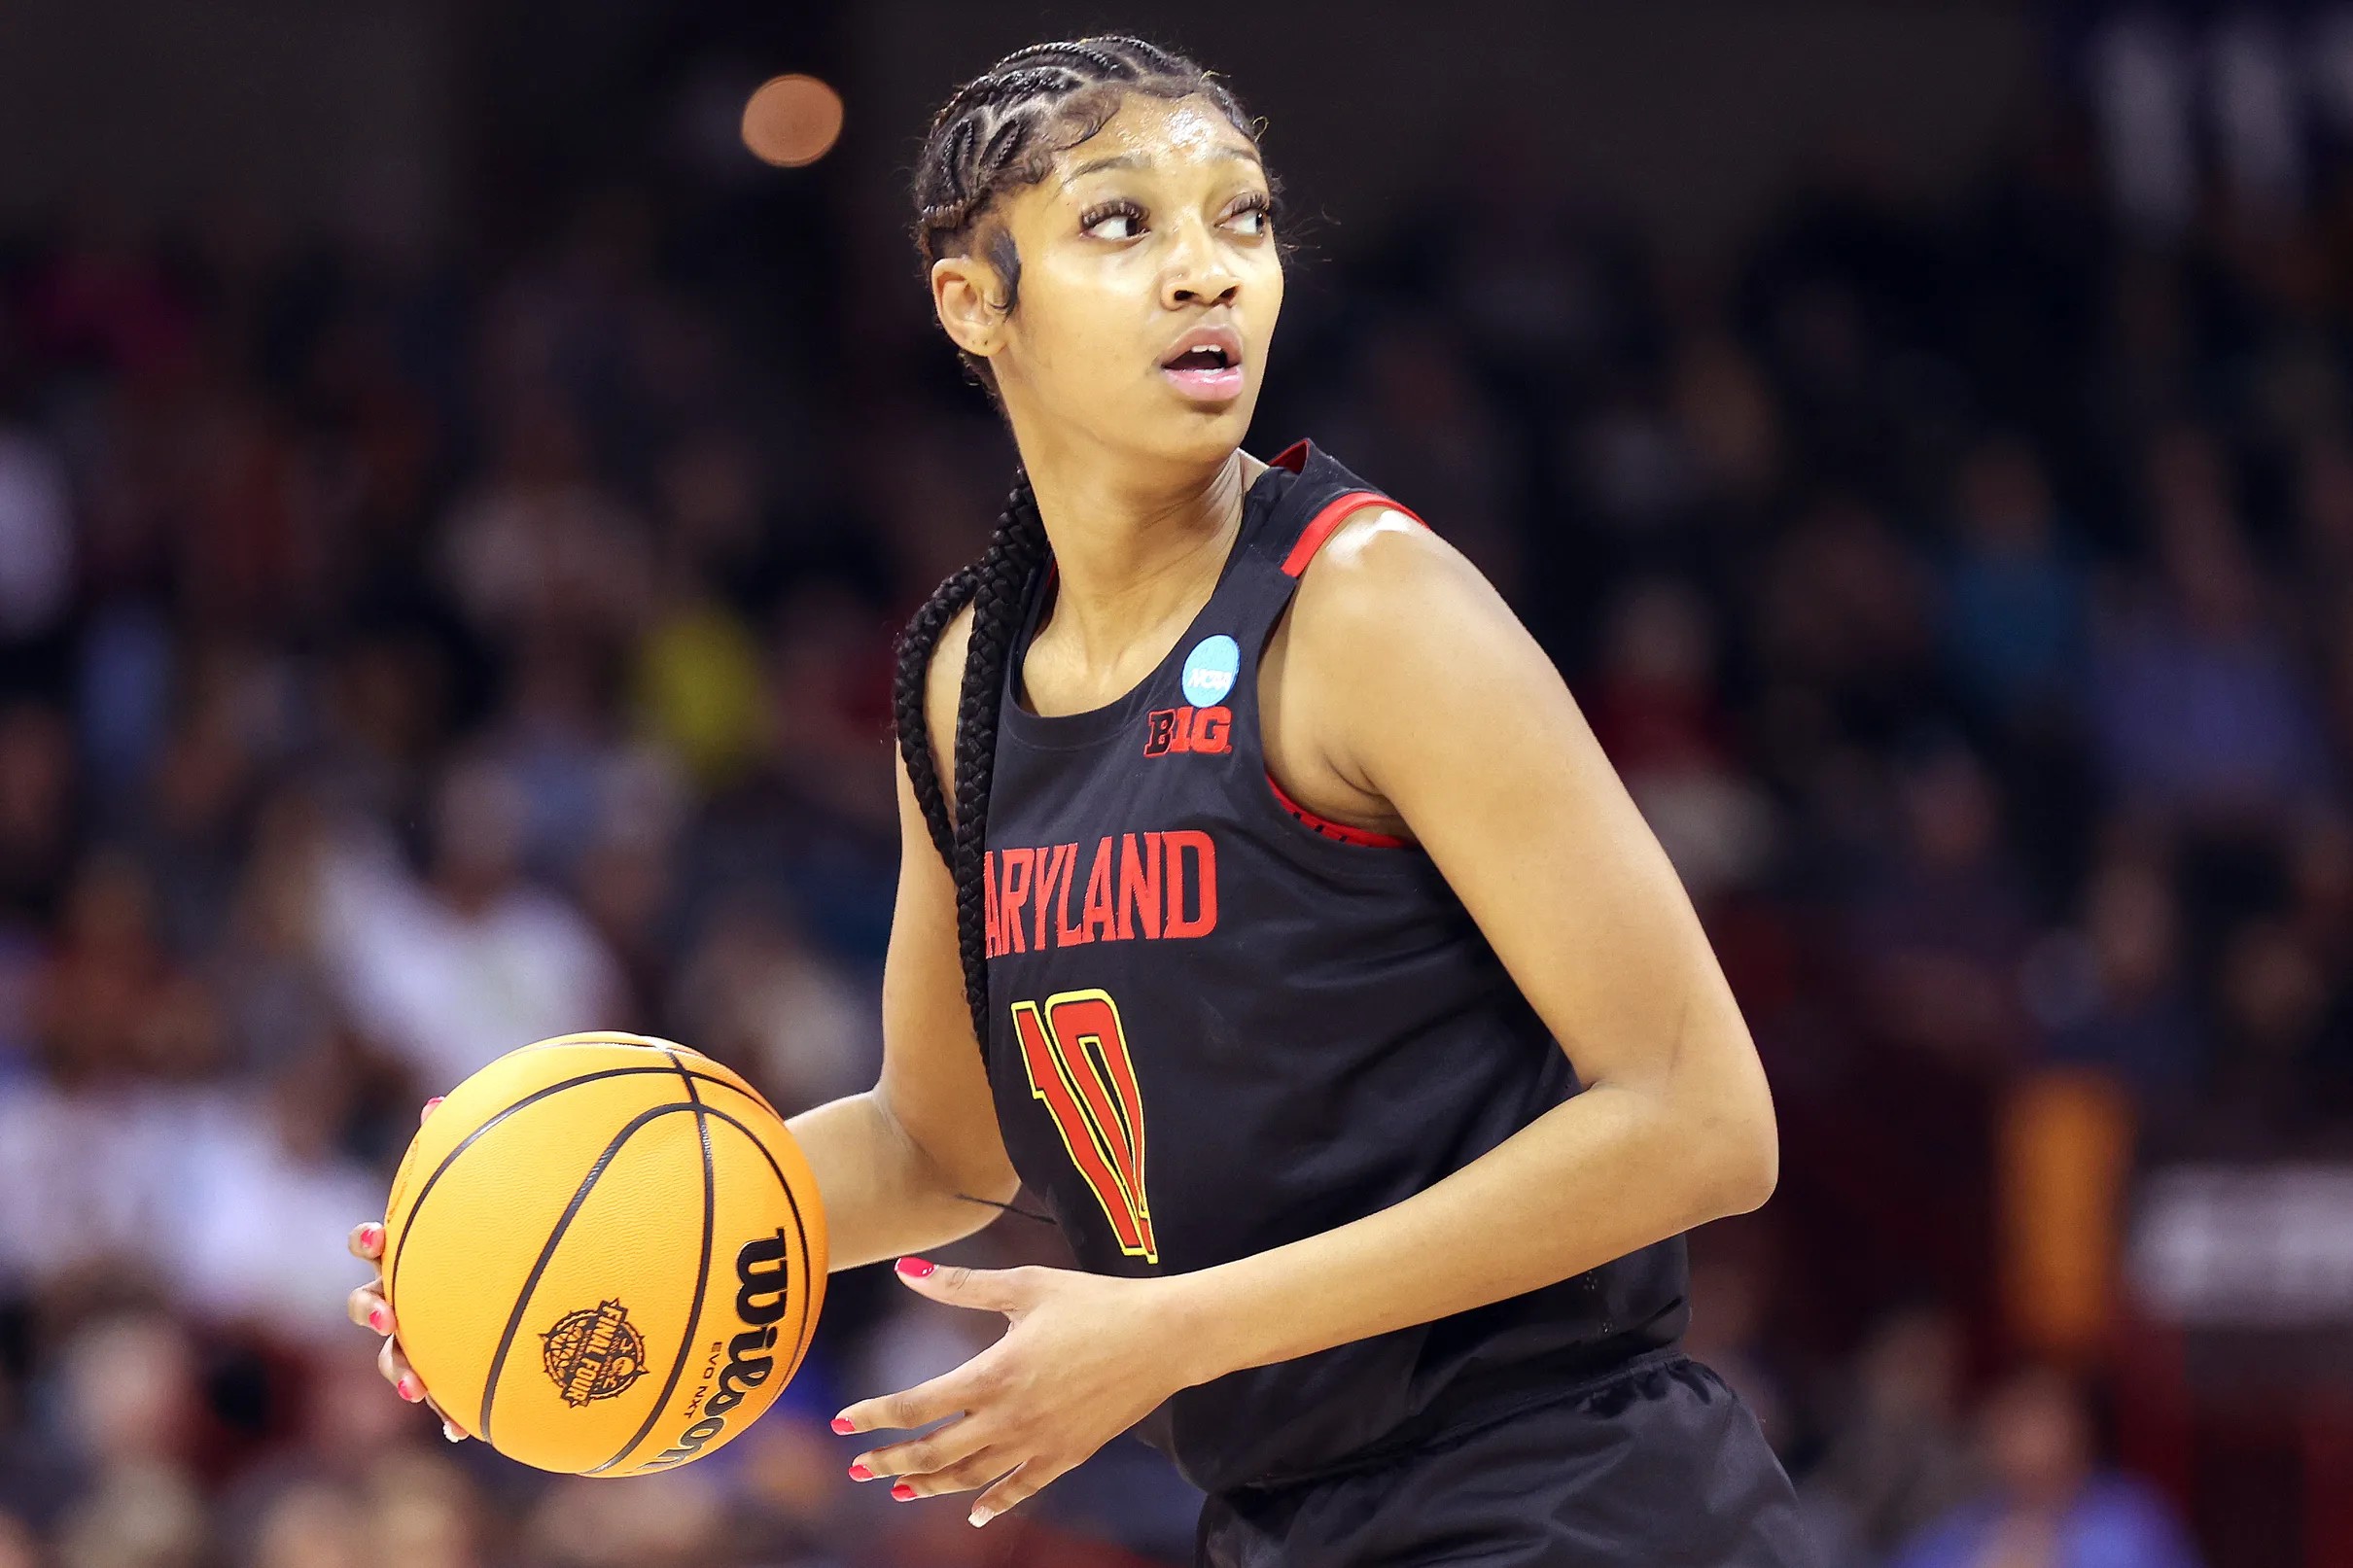 Maryland women’s basketball forward Angel Reese to enter transfer portal